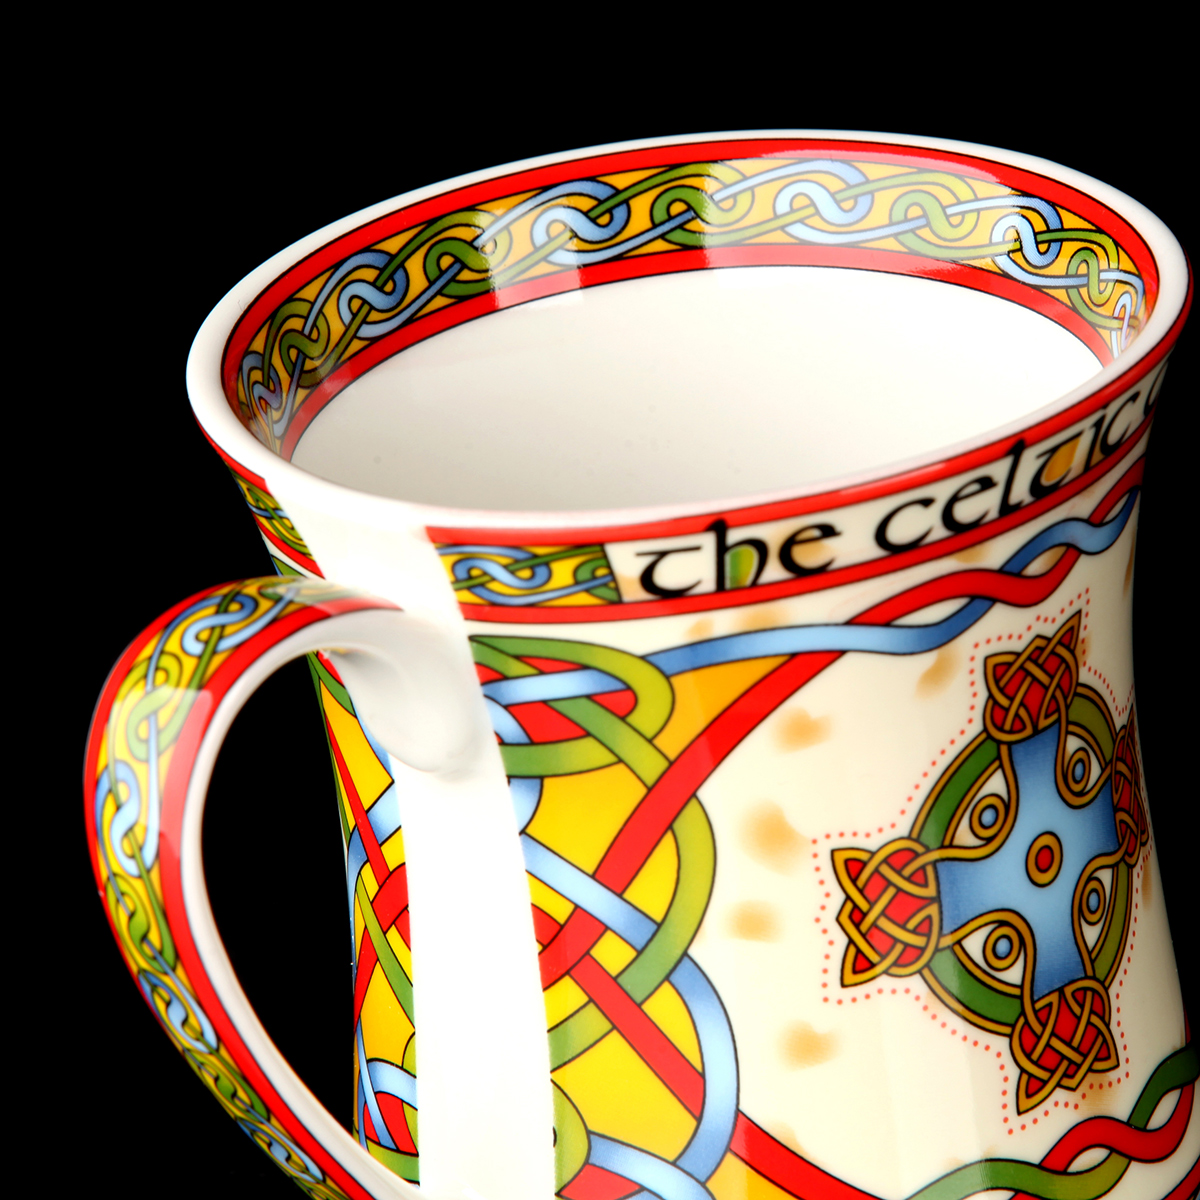 Celtic Cross Mug - Kaffeebecher aus Irland mit keltischem Kreuz & Ornamenten